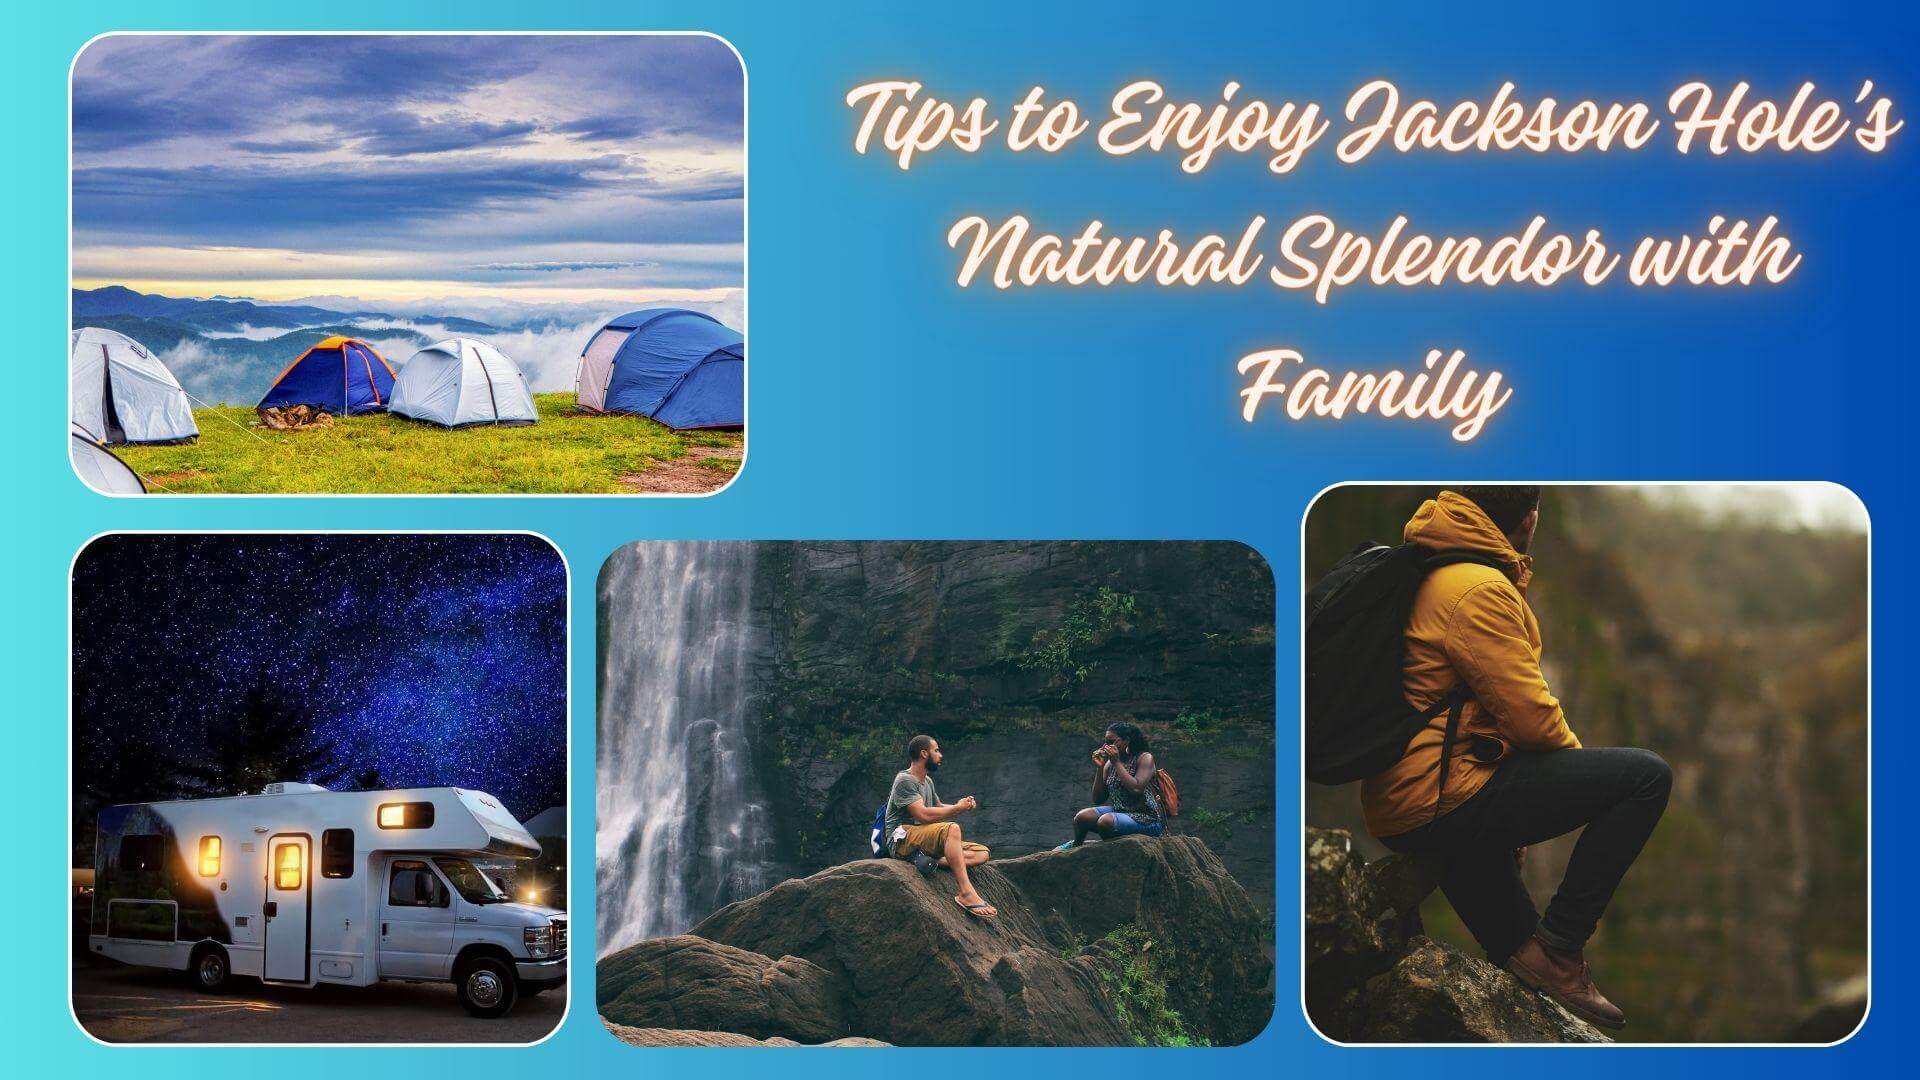 Seasonal Camping: Tips to Enjoy Jackson Hole’s Natural Splendor with Family